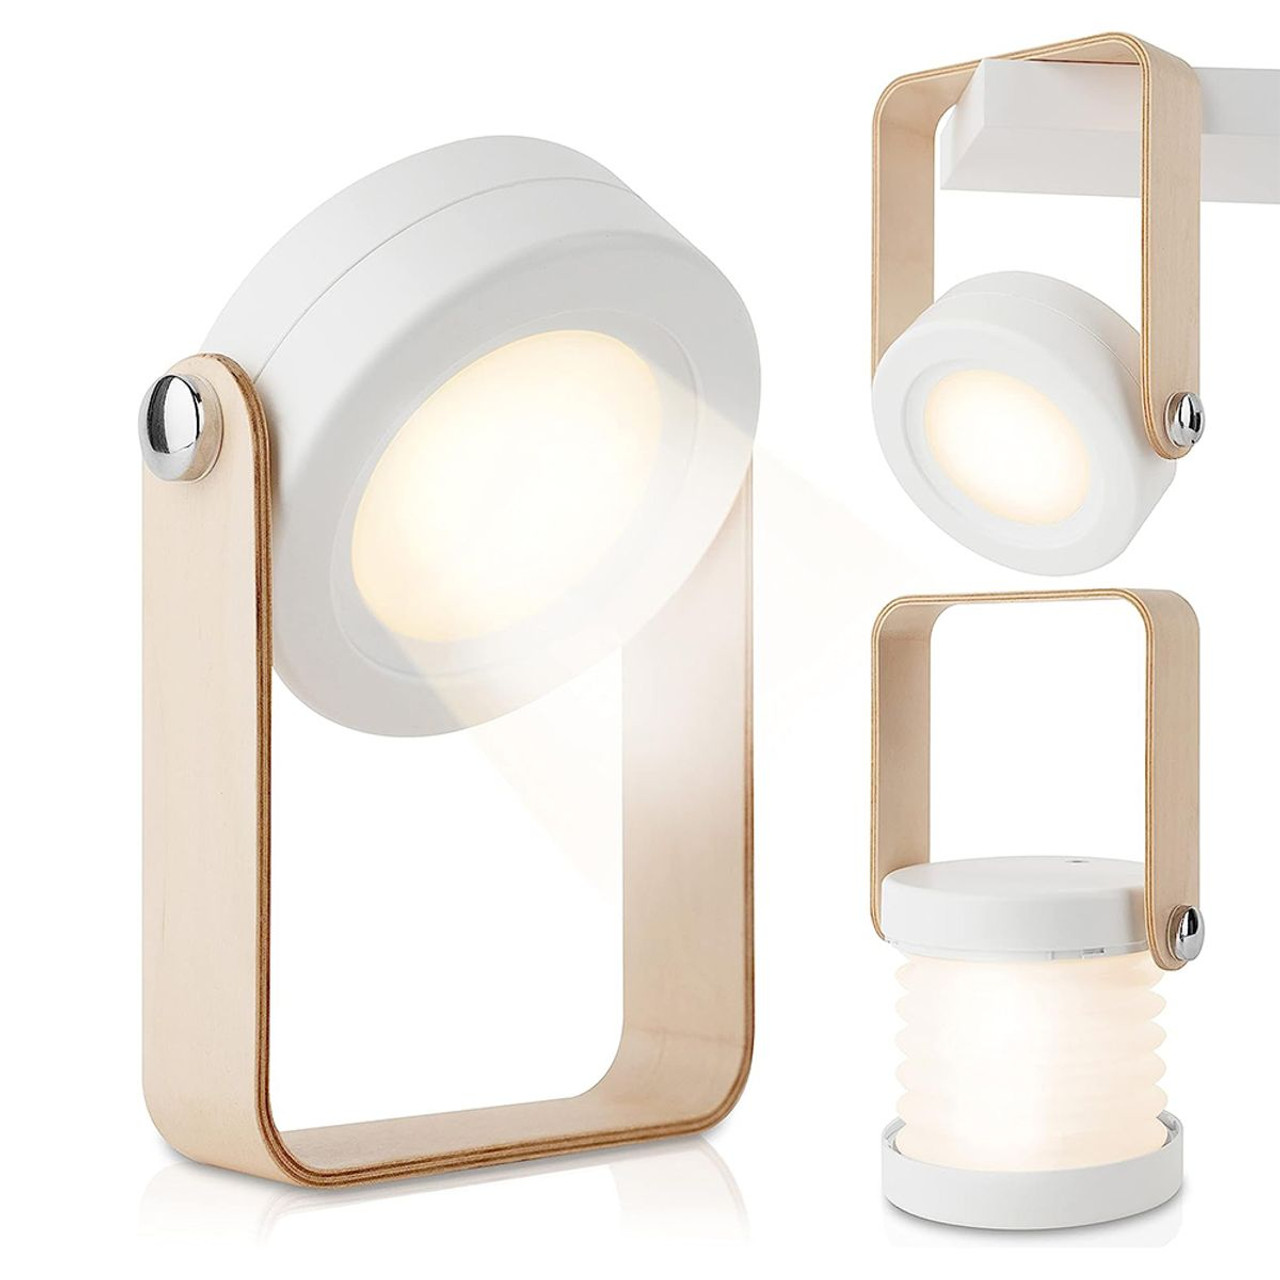 Versatile Rechargeable Portable LED Lamp product image